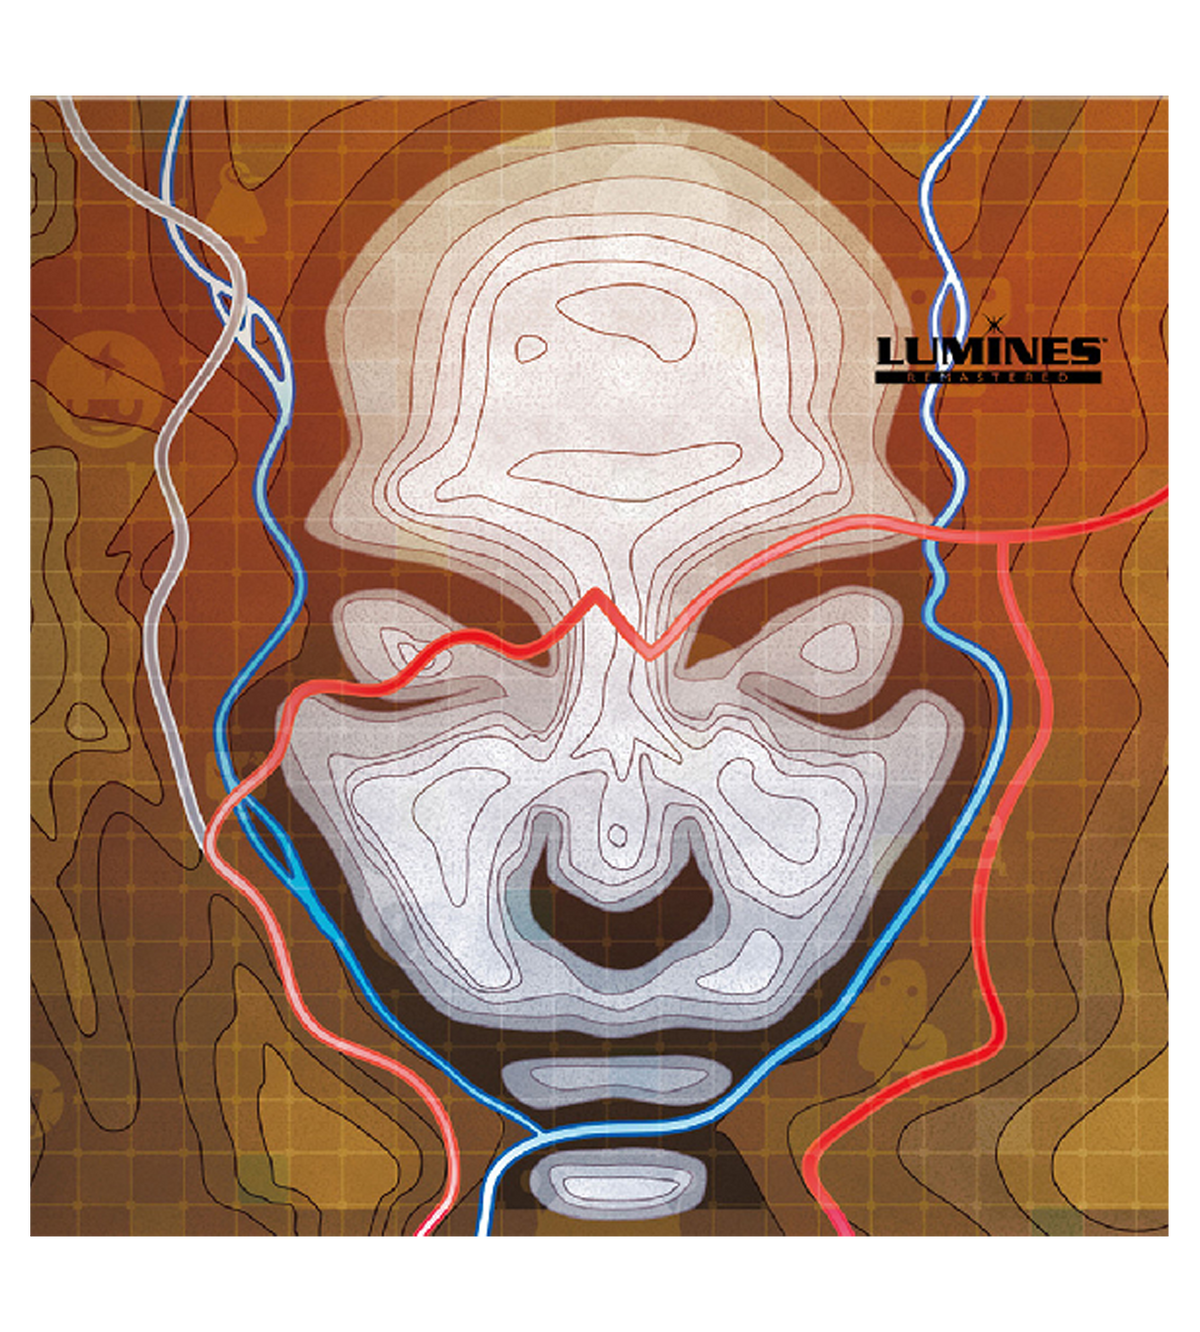 Lumines Remastered - 2LP Vinyl Soundtrack